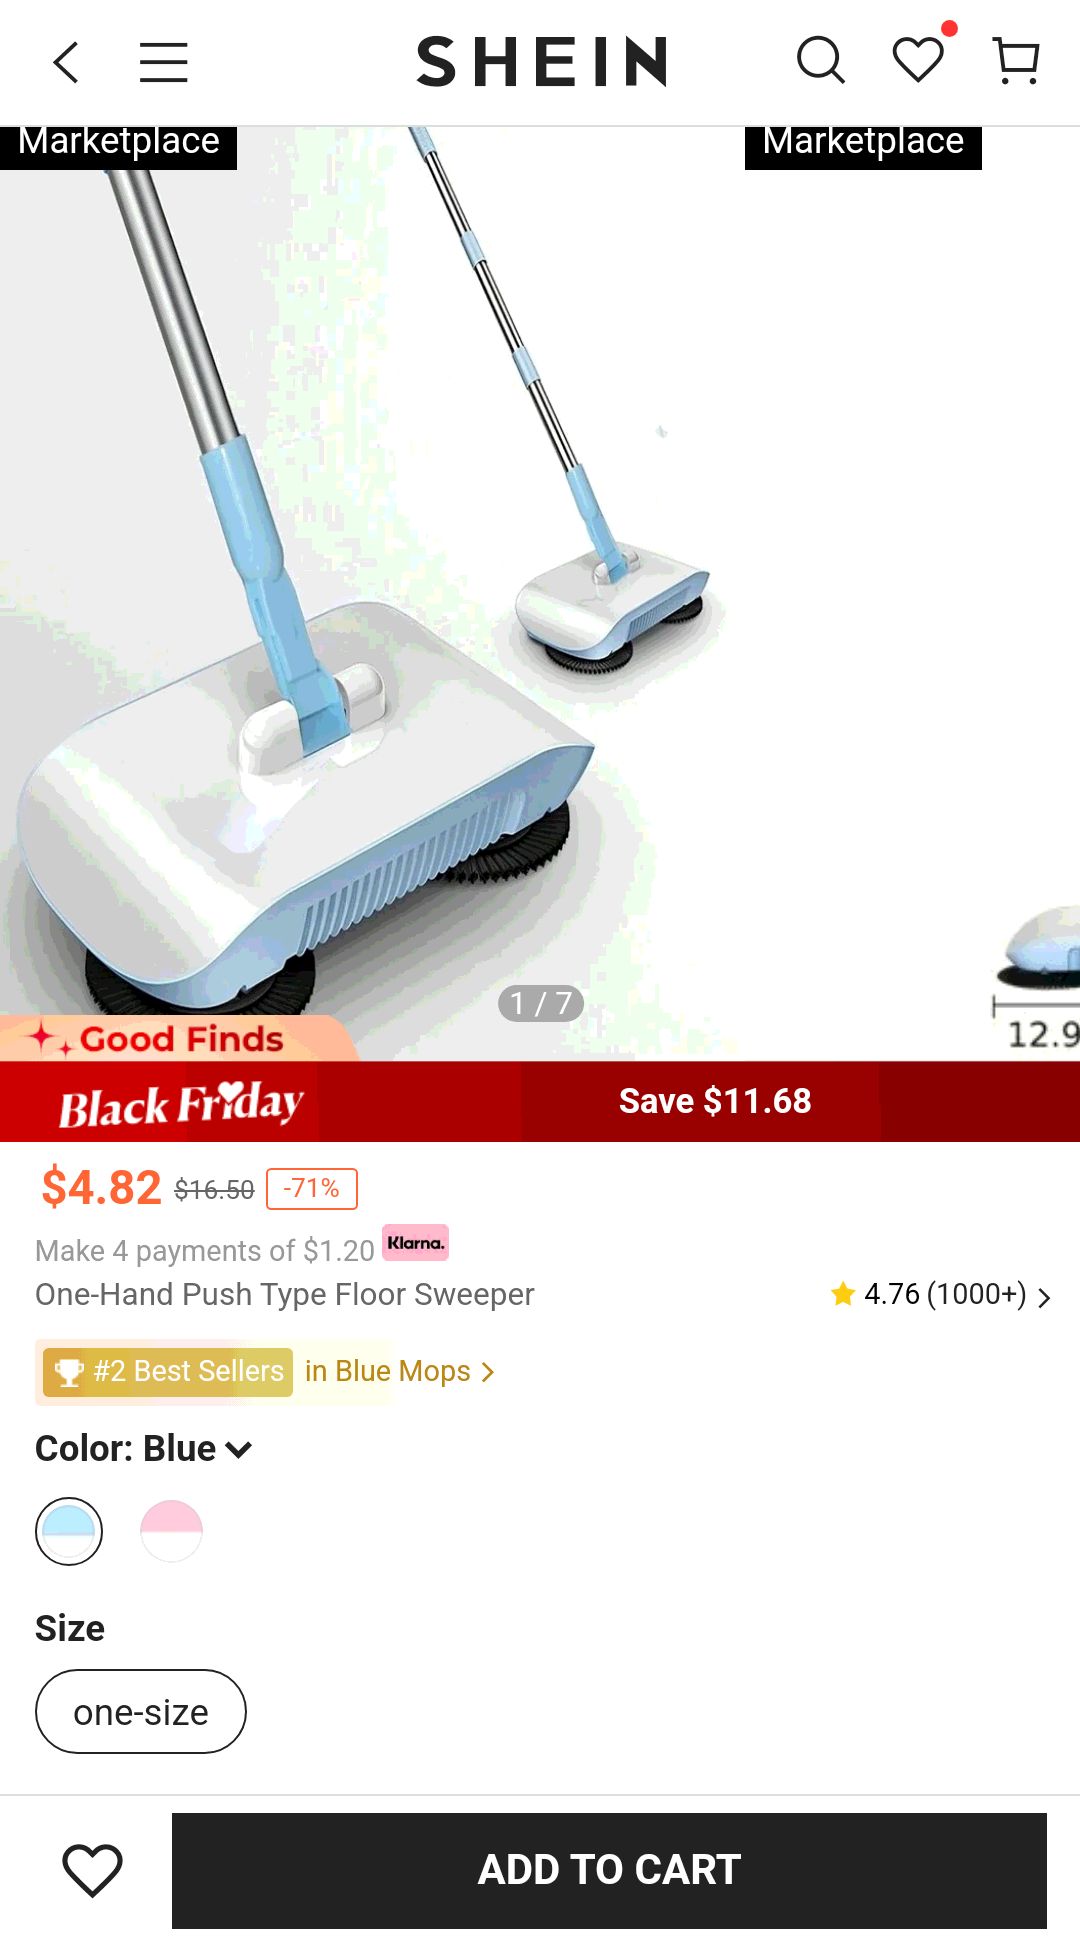 One-hand Push Type Floor Sweeper | SHEIN USA